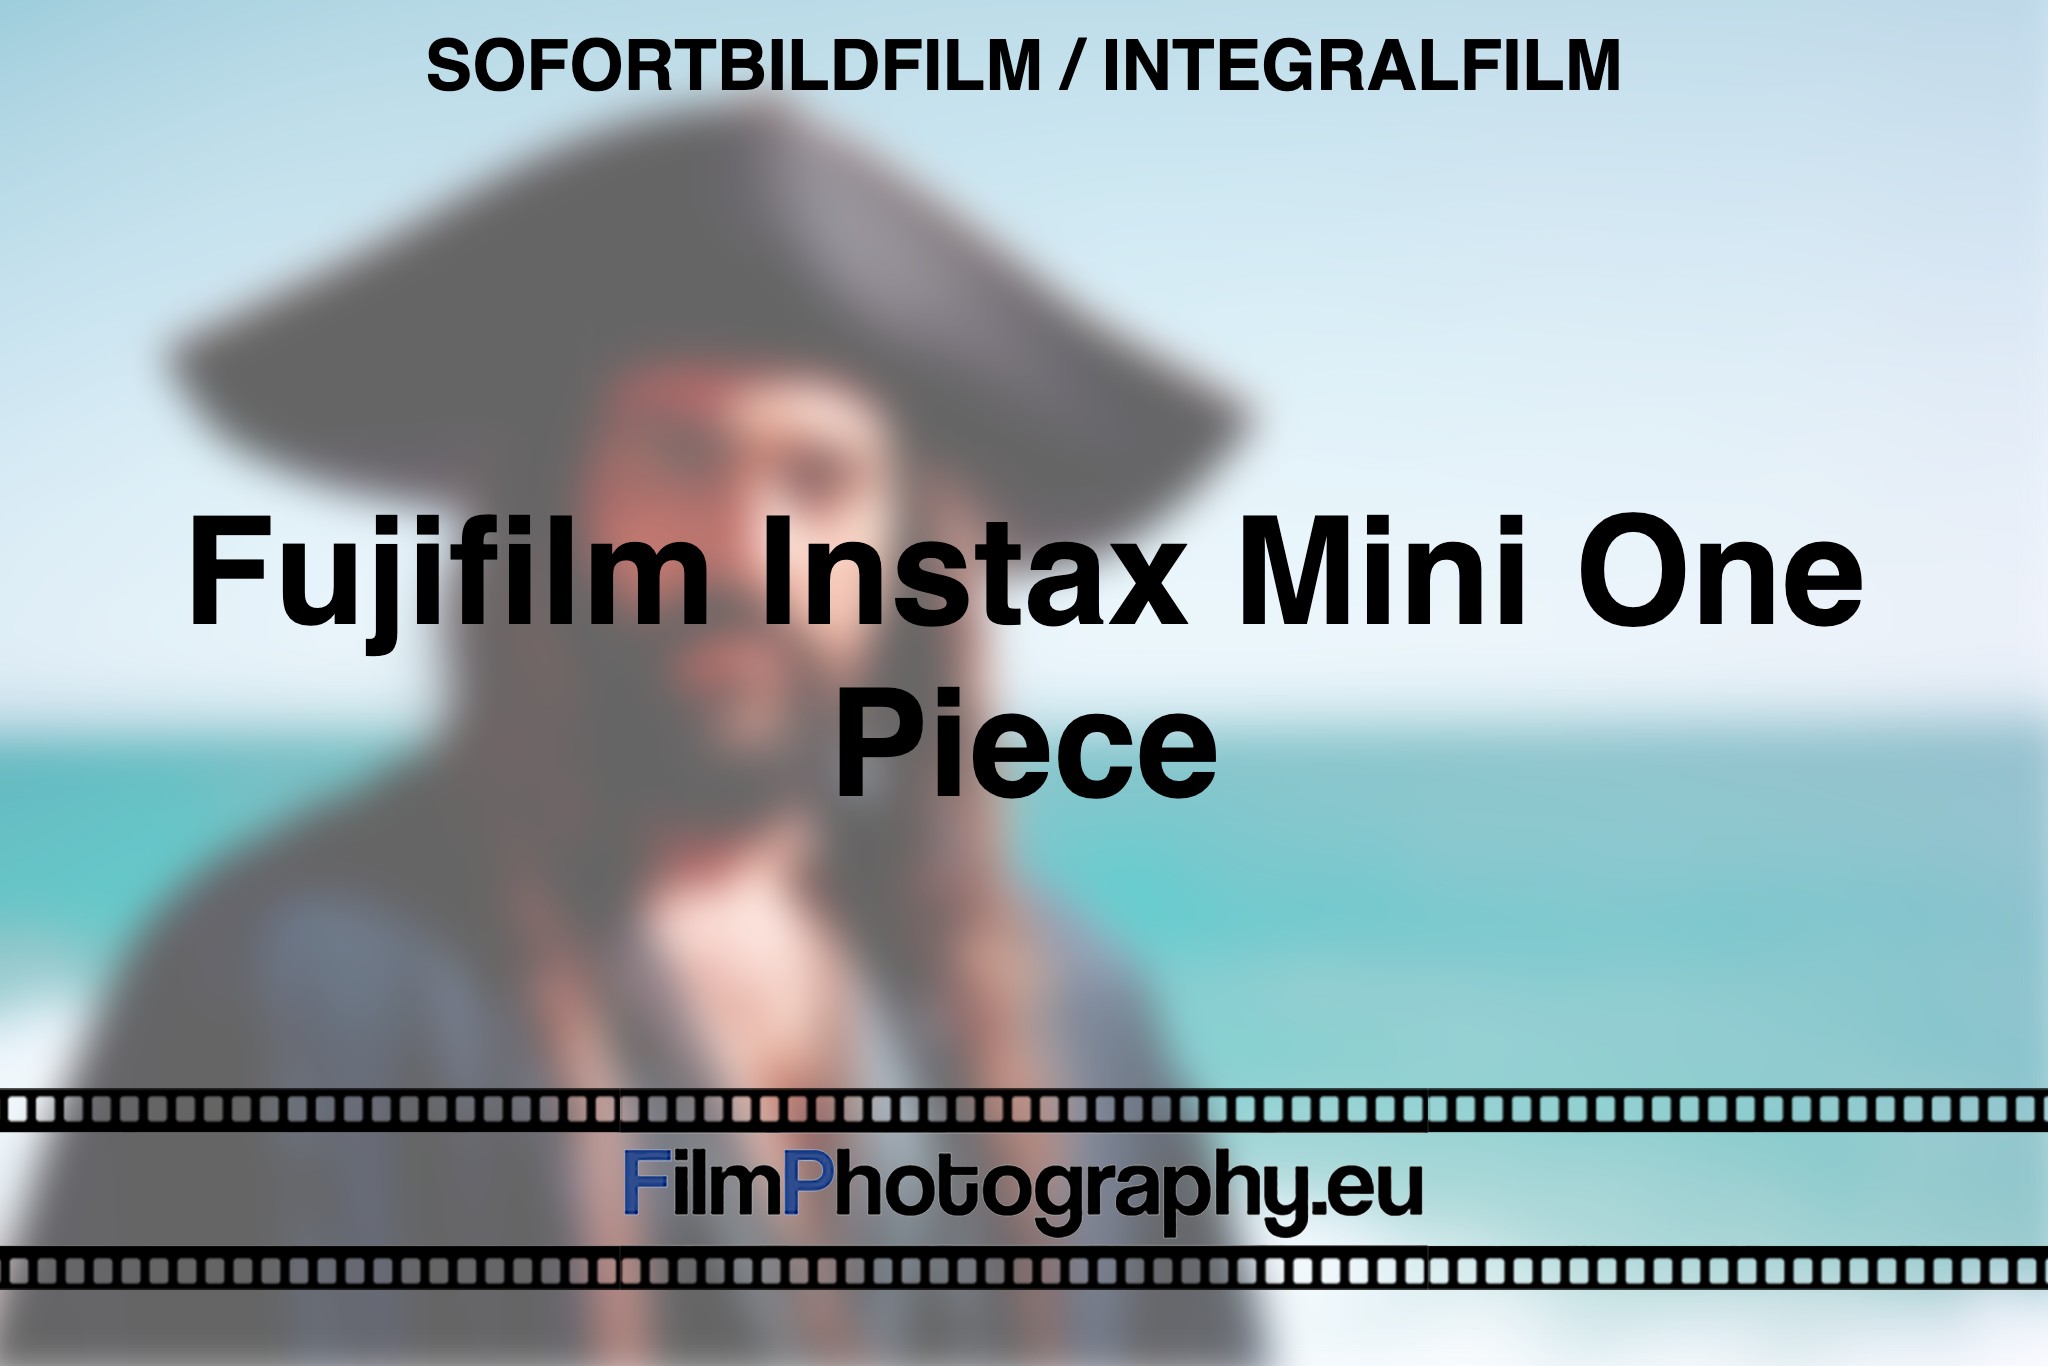 fujifilm-instax-mini-one-piece-sofortbildfilm-integralfilm-fp-bnv